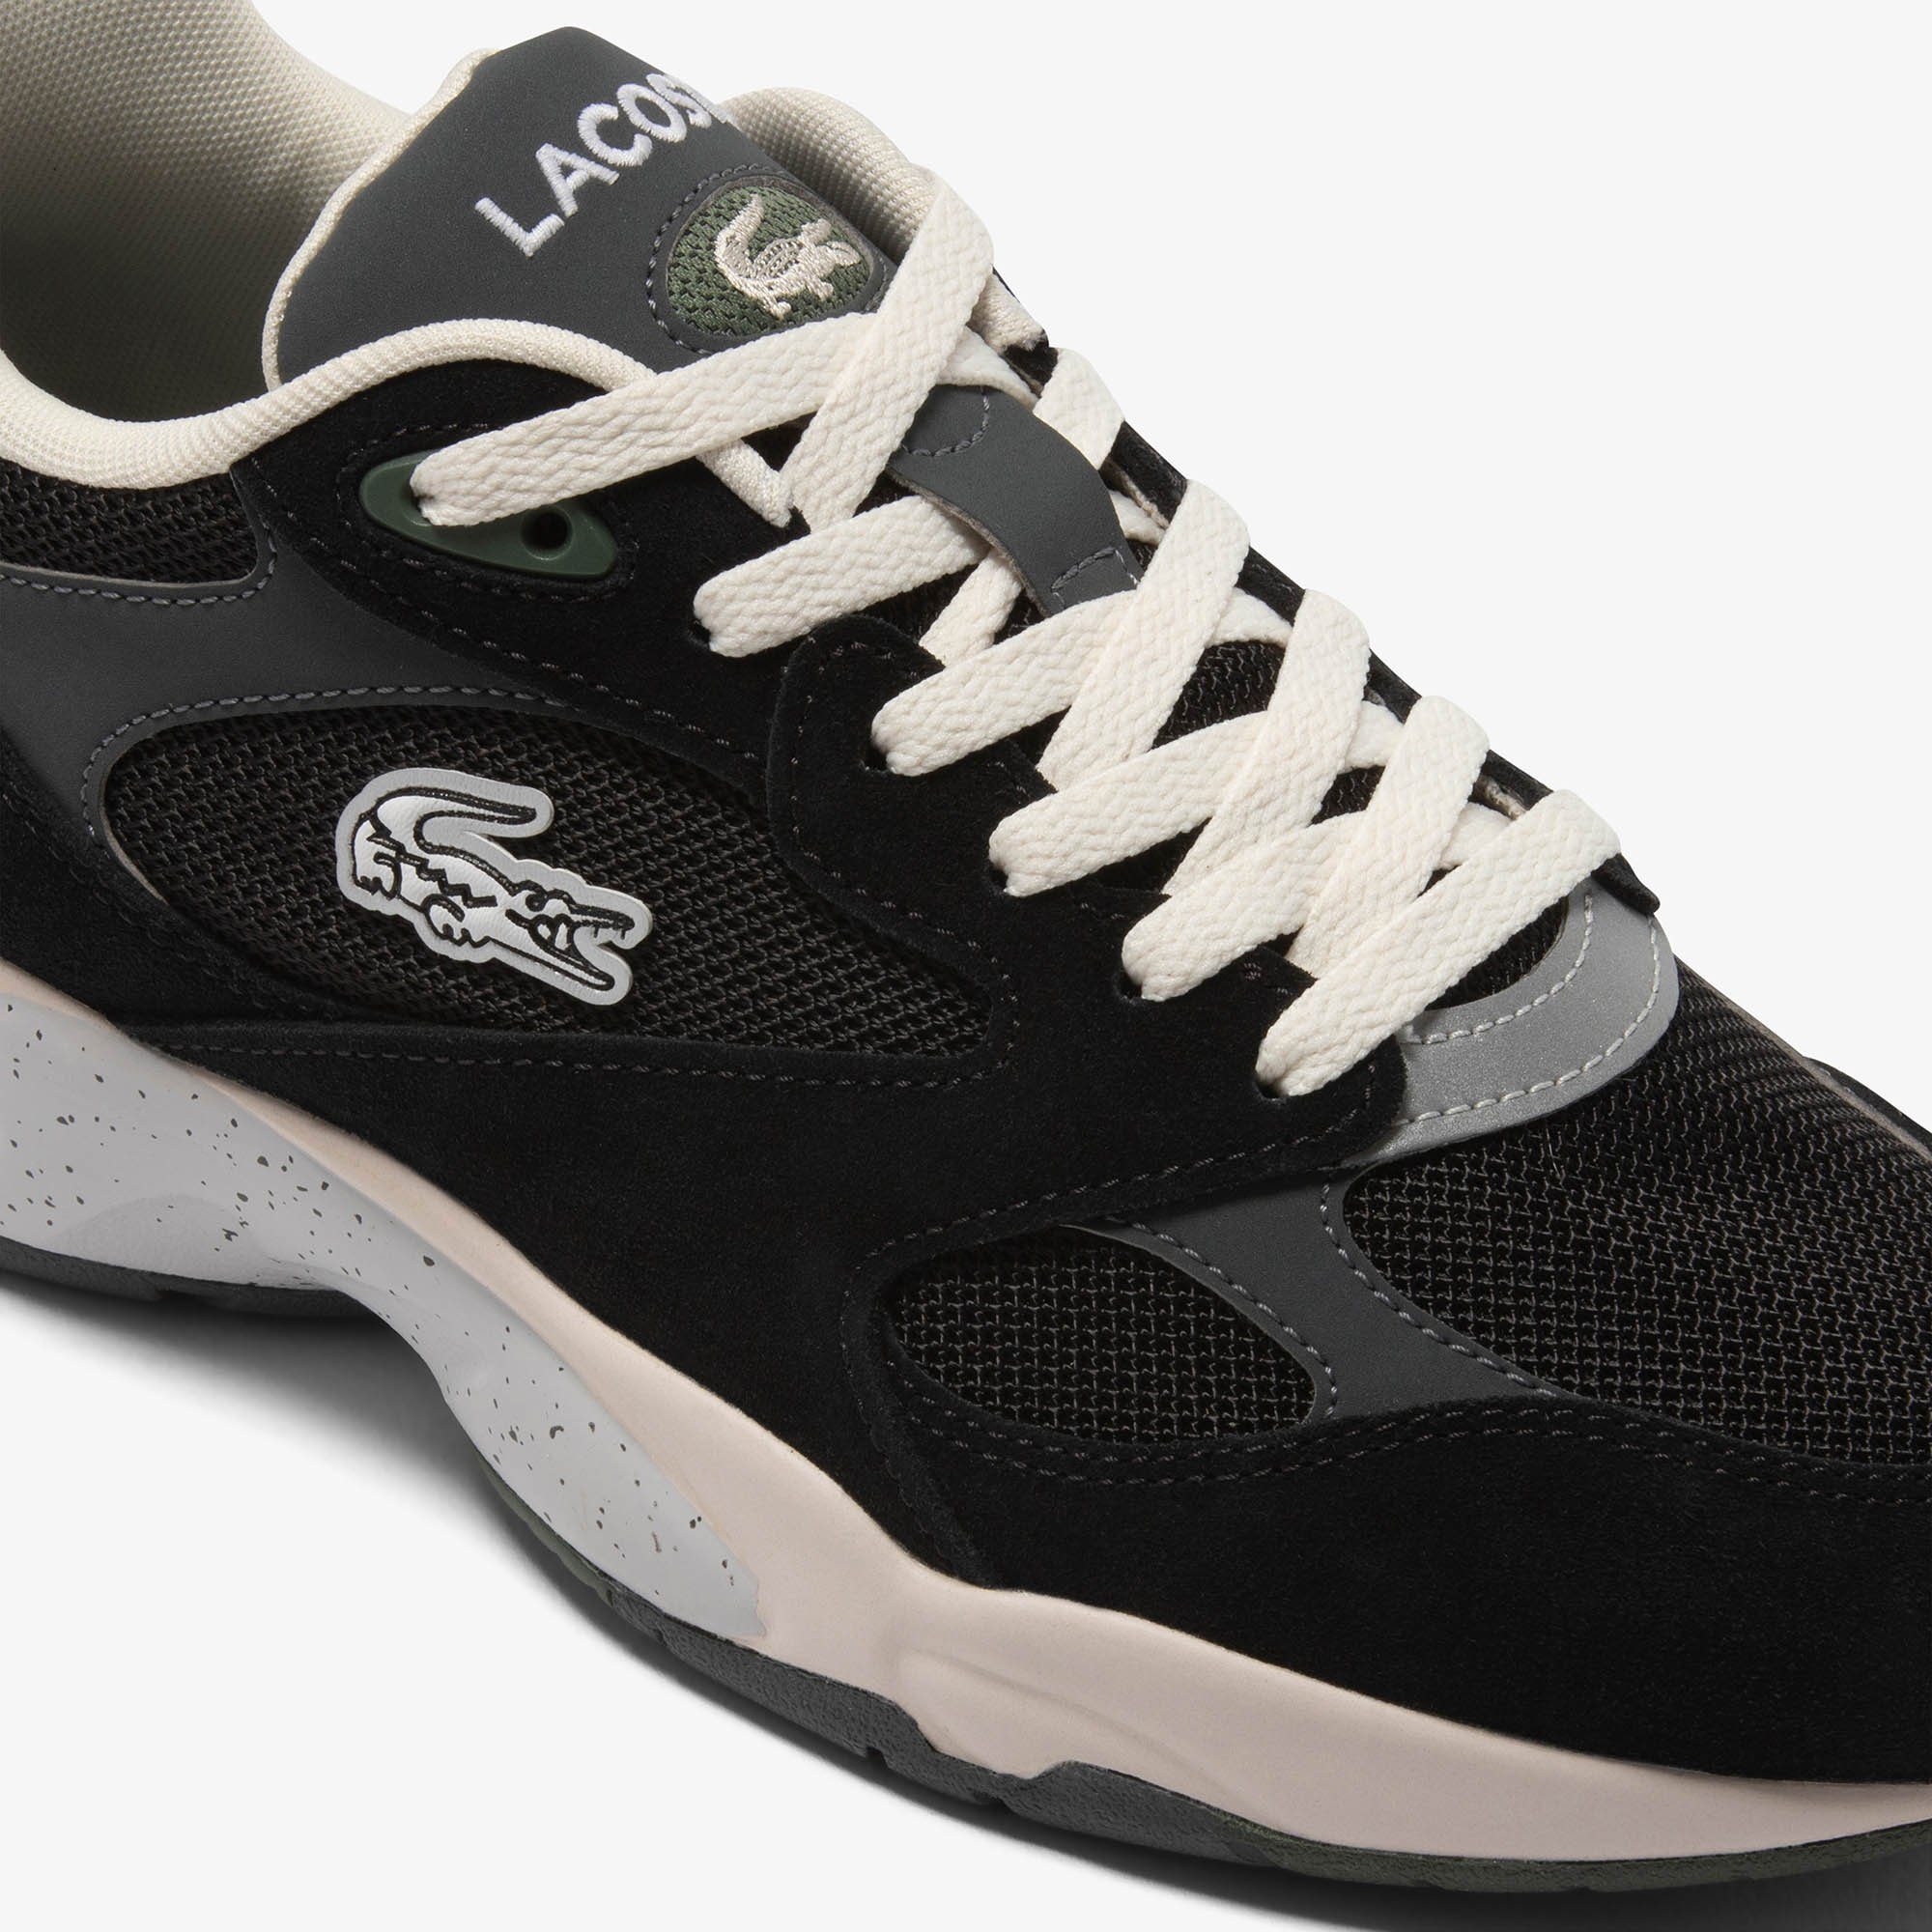 223 SMA Lacoste 96 black-dkgrey STORM 1 VTG Sneaker